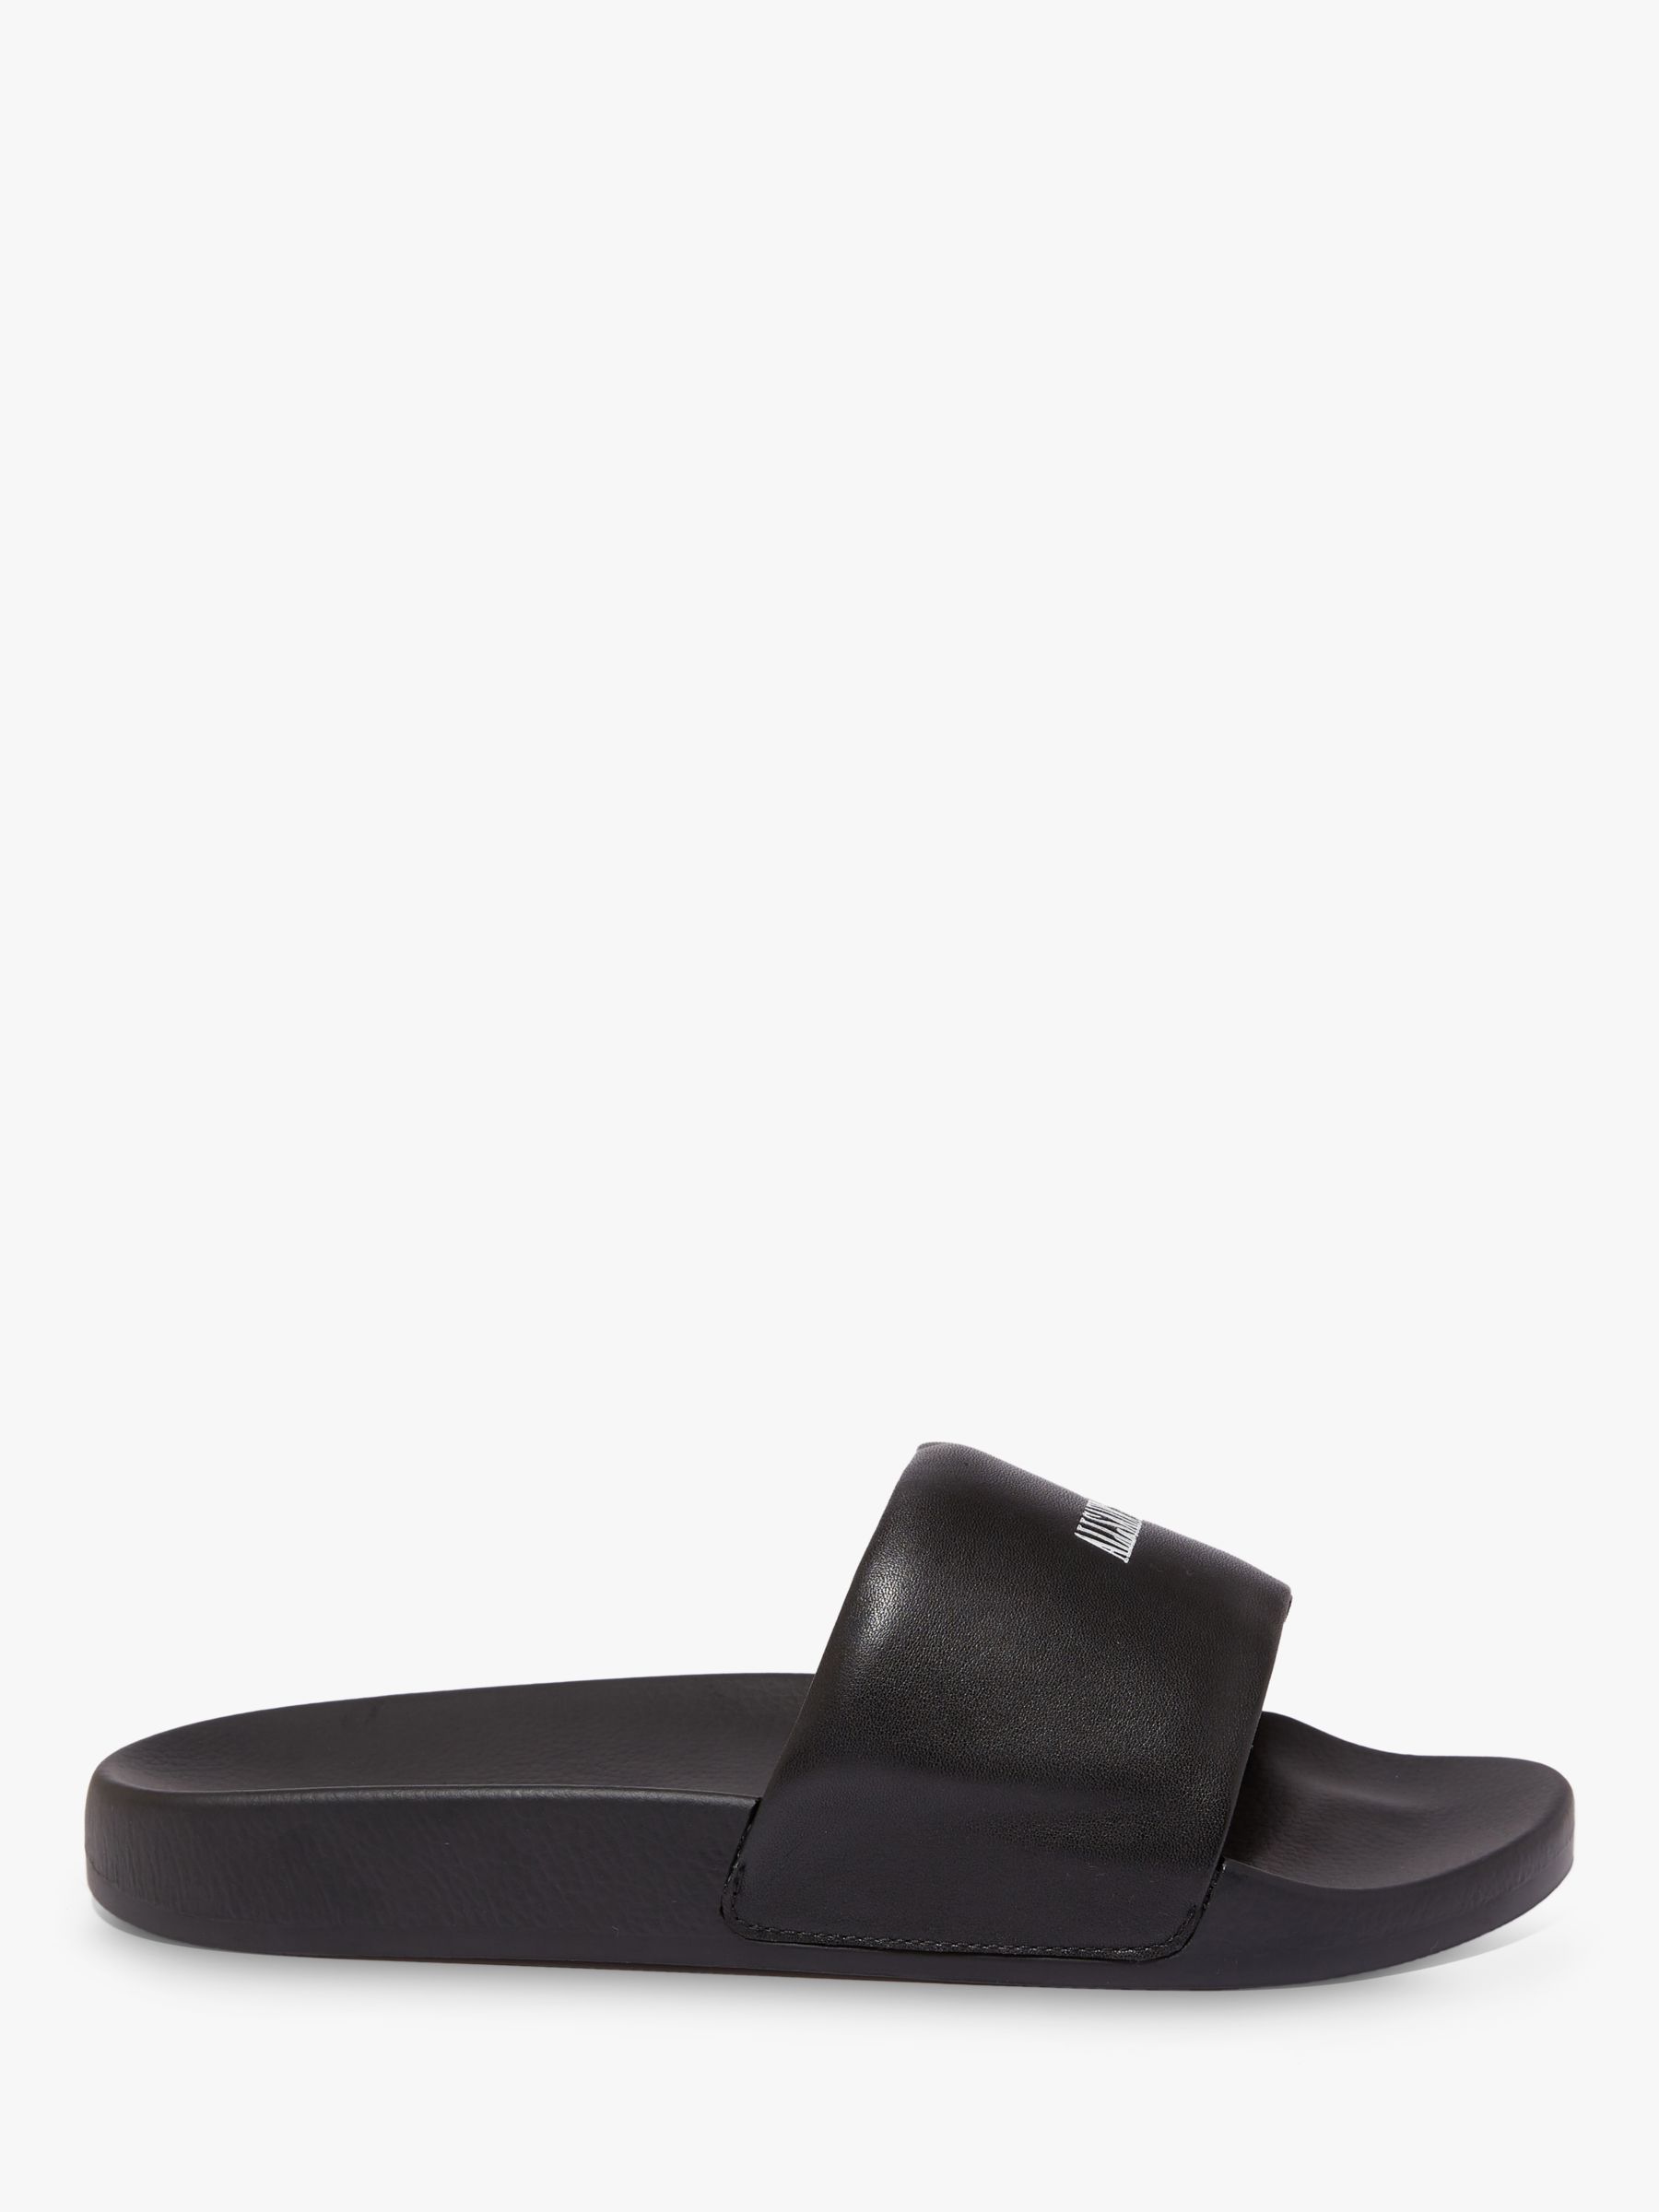 AllSaints Carmel Leather Slider Sandals